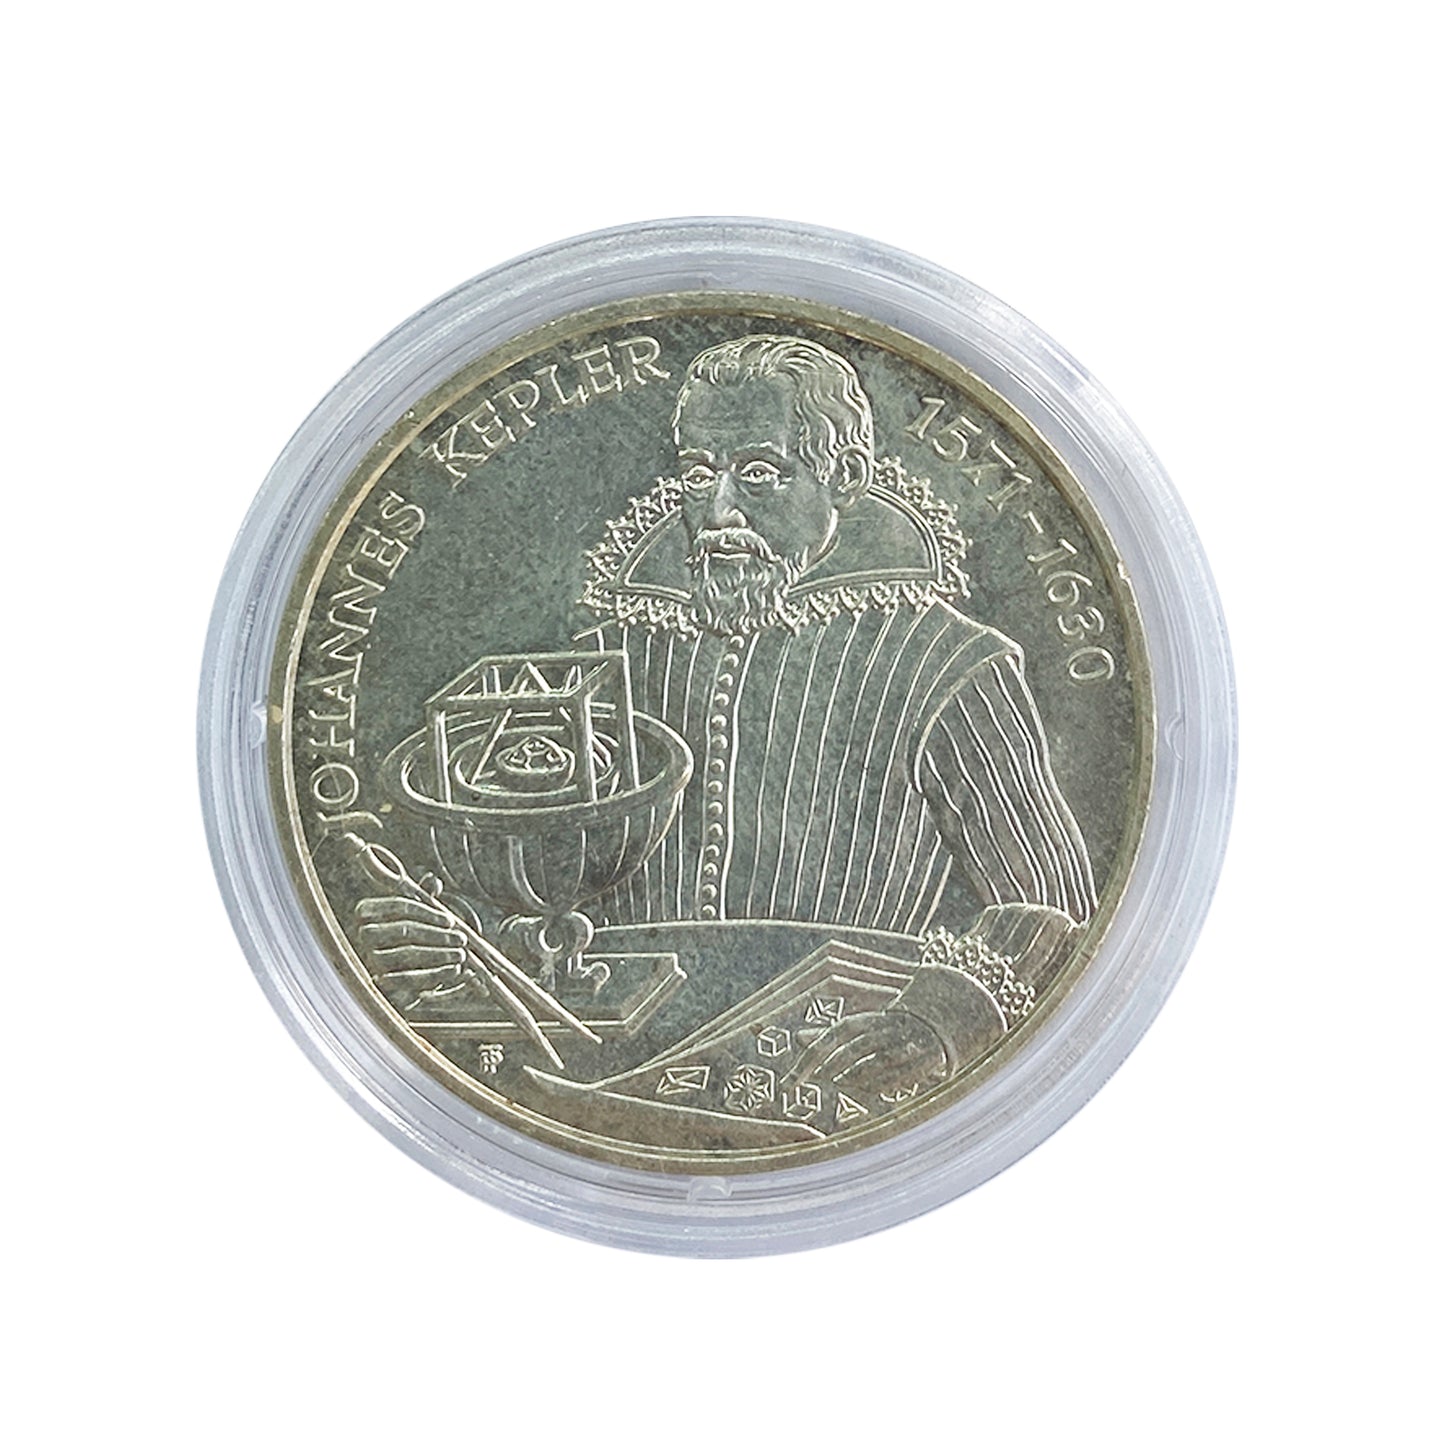 Austria - Moneda 10 euros plata 2002 - Castillo de Eggenberg